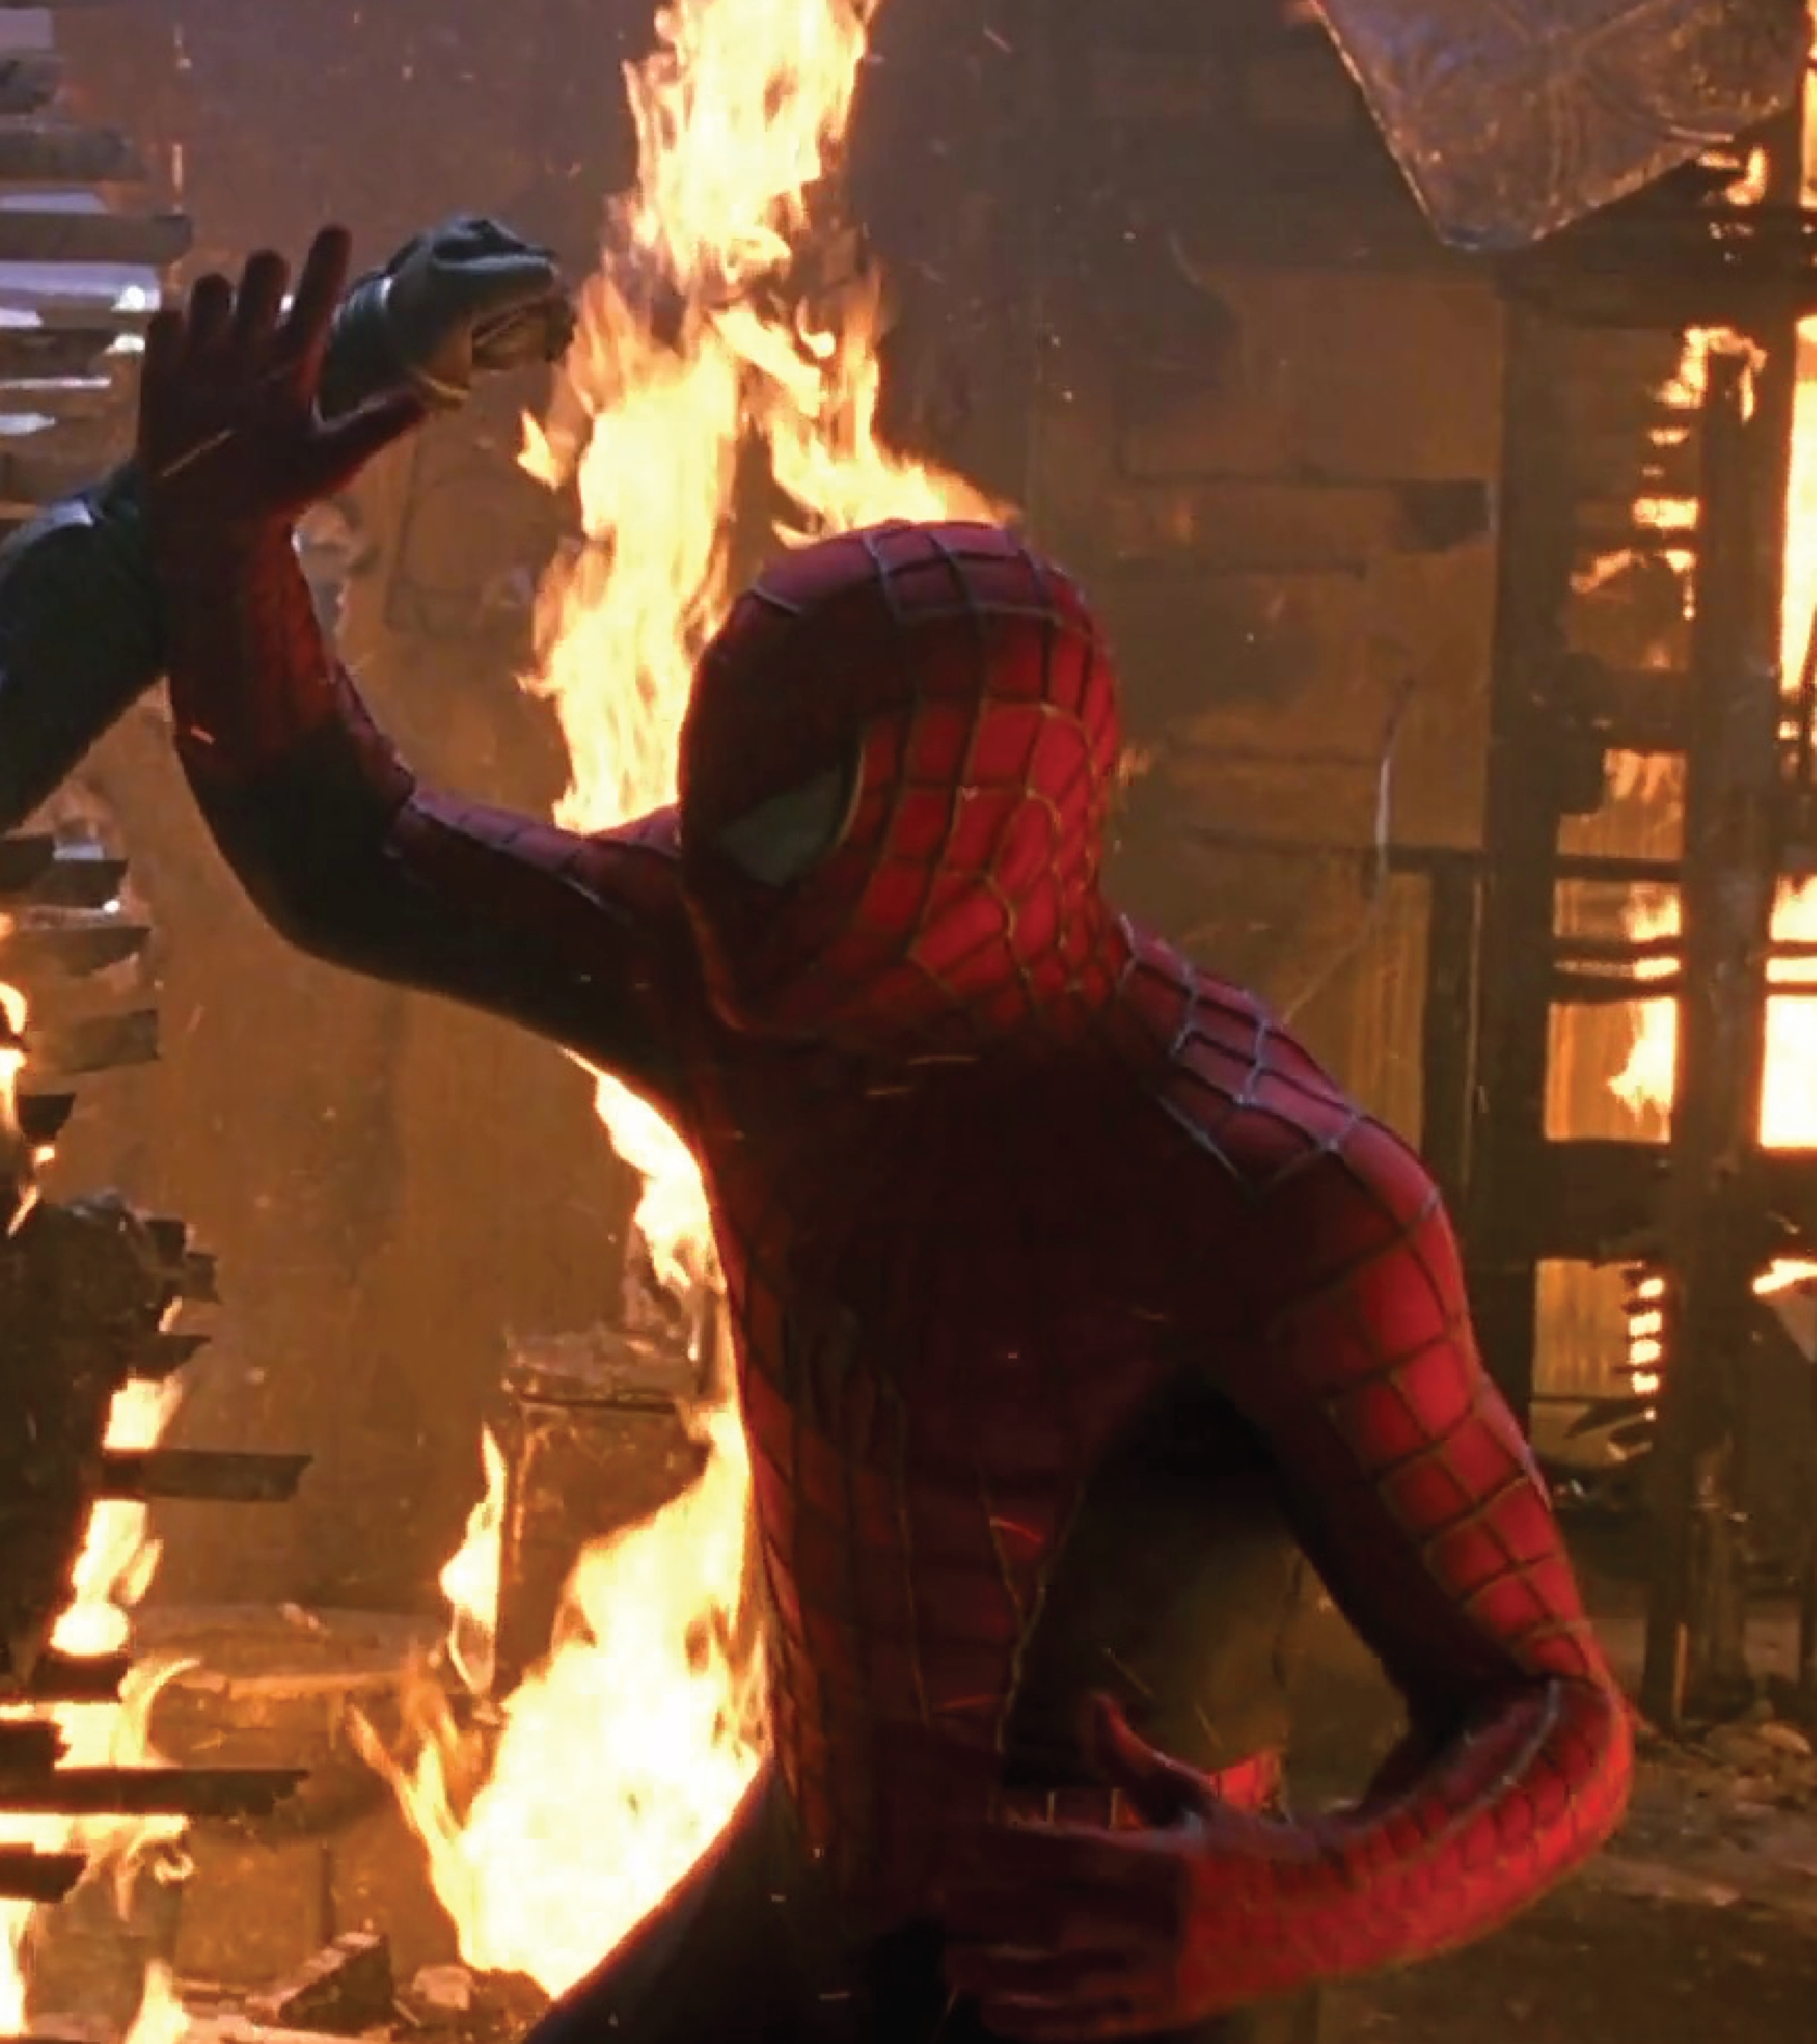 Spider-Man (2002) - IMDb